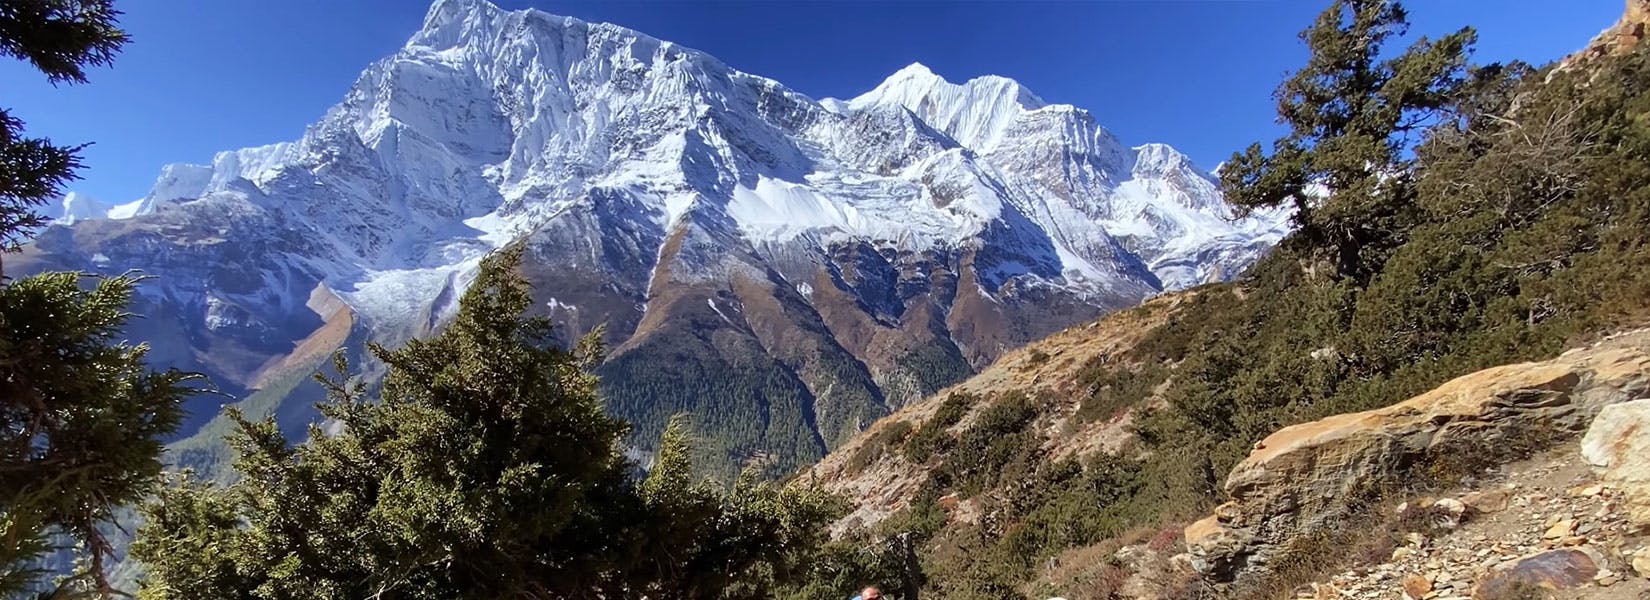 Annapurna Base Camp Nepal: FAQs and Insights